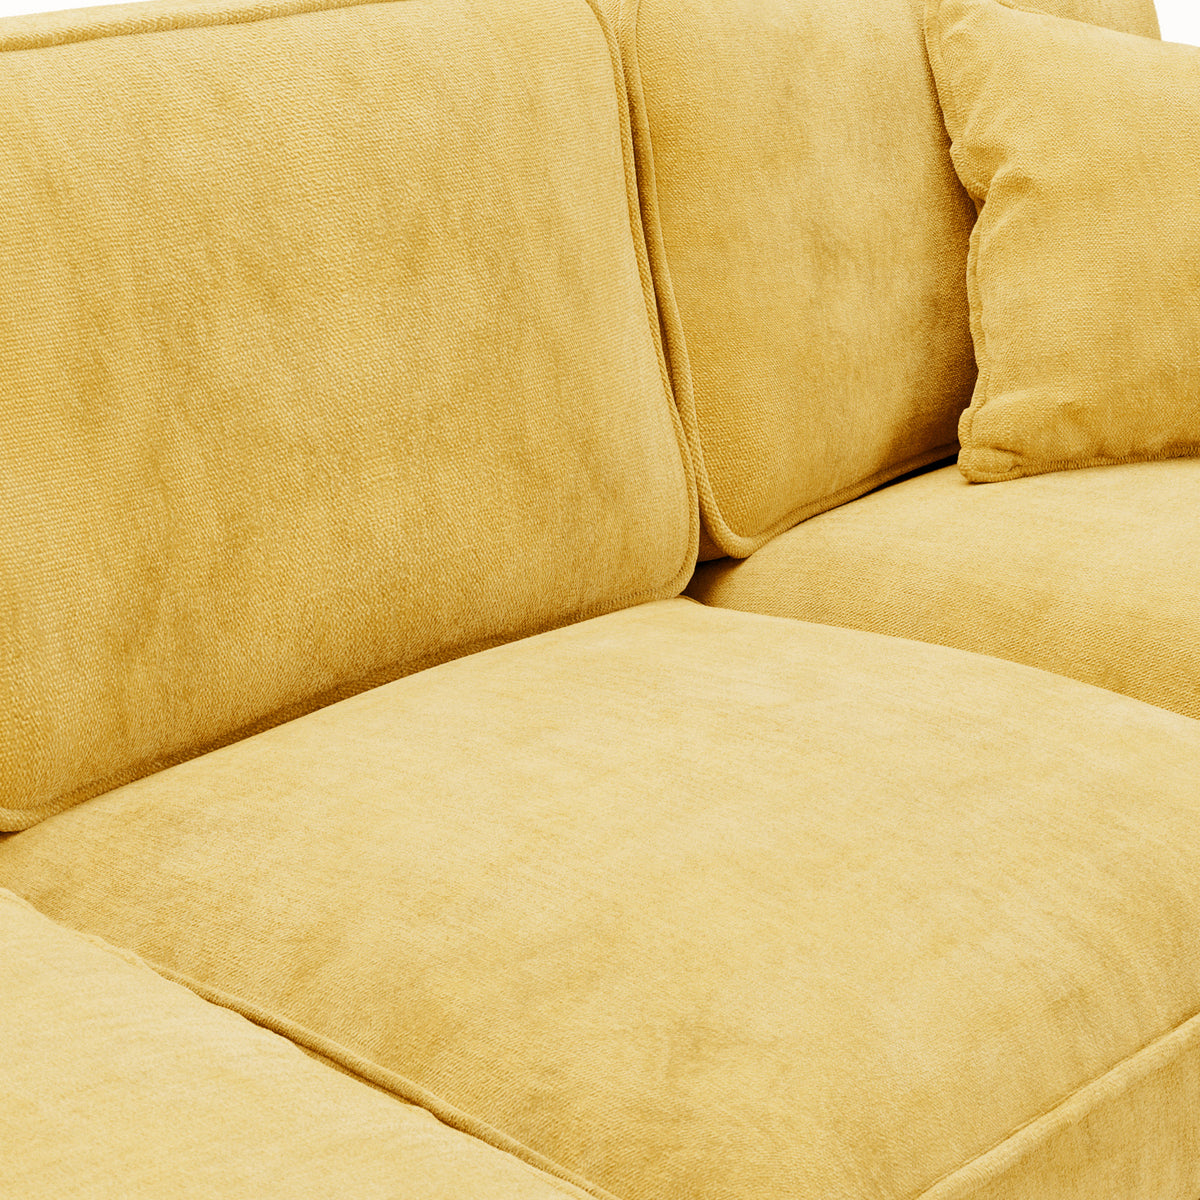 Alfie Gold Corner Sofa from Roseland Furniture